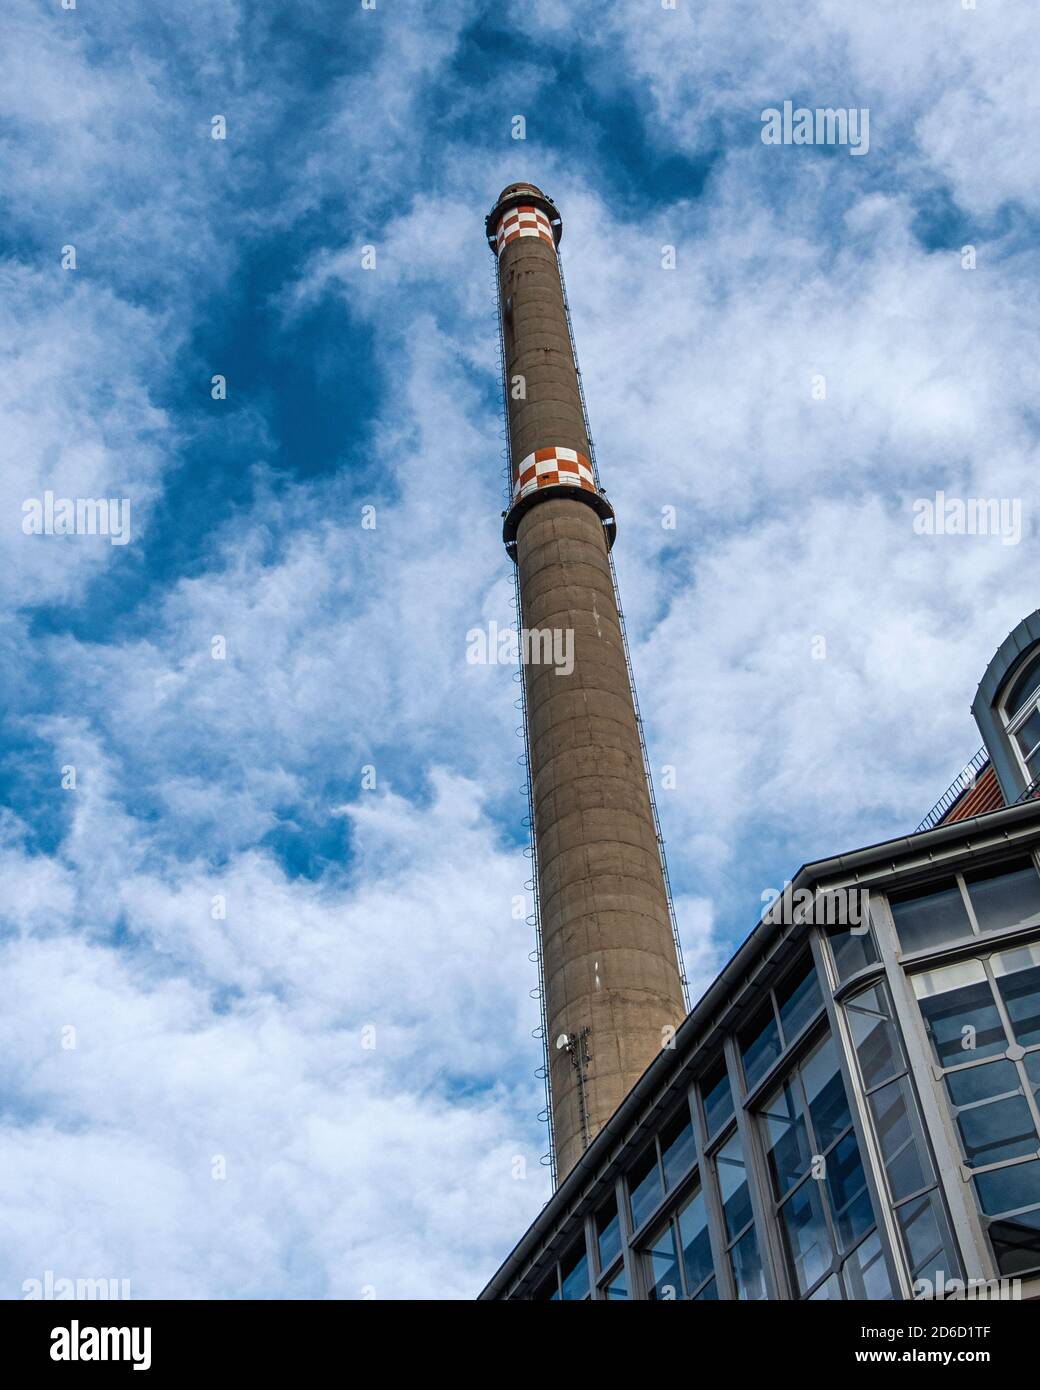 Vattenfall Heizkraftwerk,Tall chimney of the Thermal Power plant in Scharnhorststraße, Mitte,Berlin,Germany Stock Photo